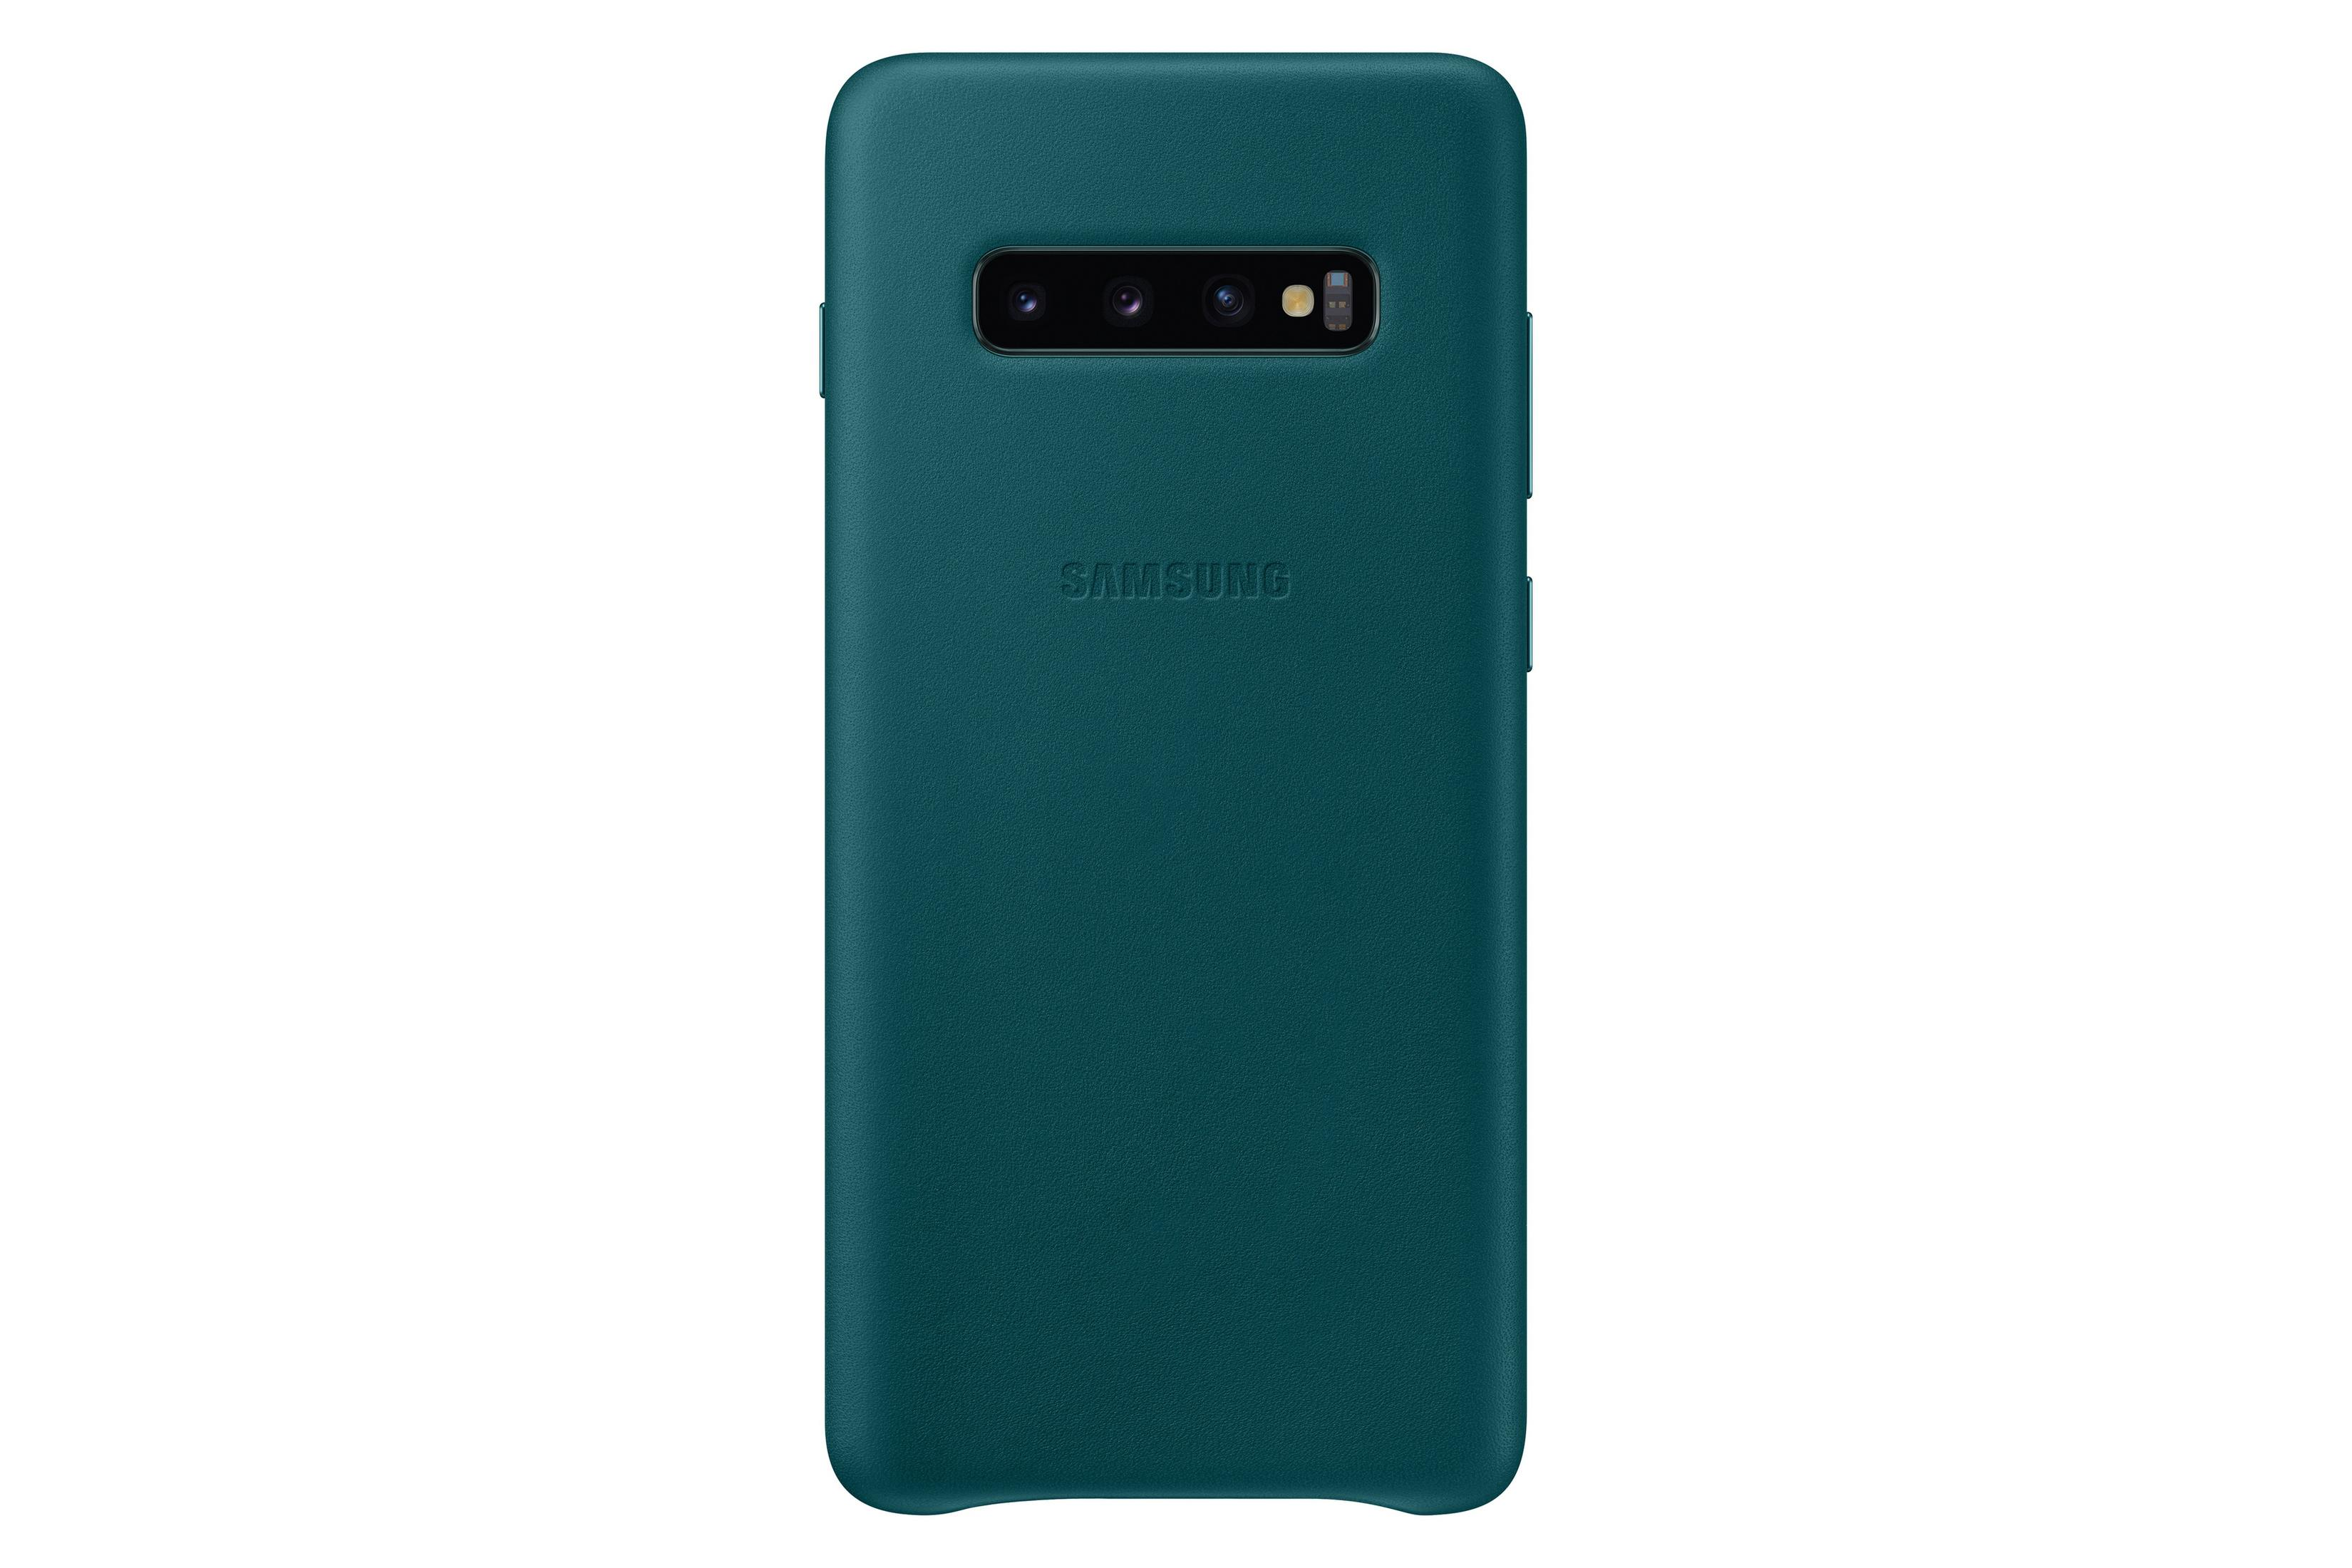 Samsung, Grün Backcover, Galaxy GREEN, S10+ S10+, LEATHER COVER SAMSUNG EF-VG975LGEGWW